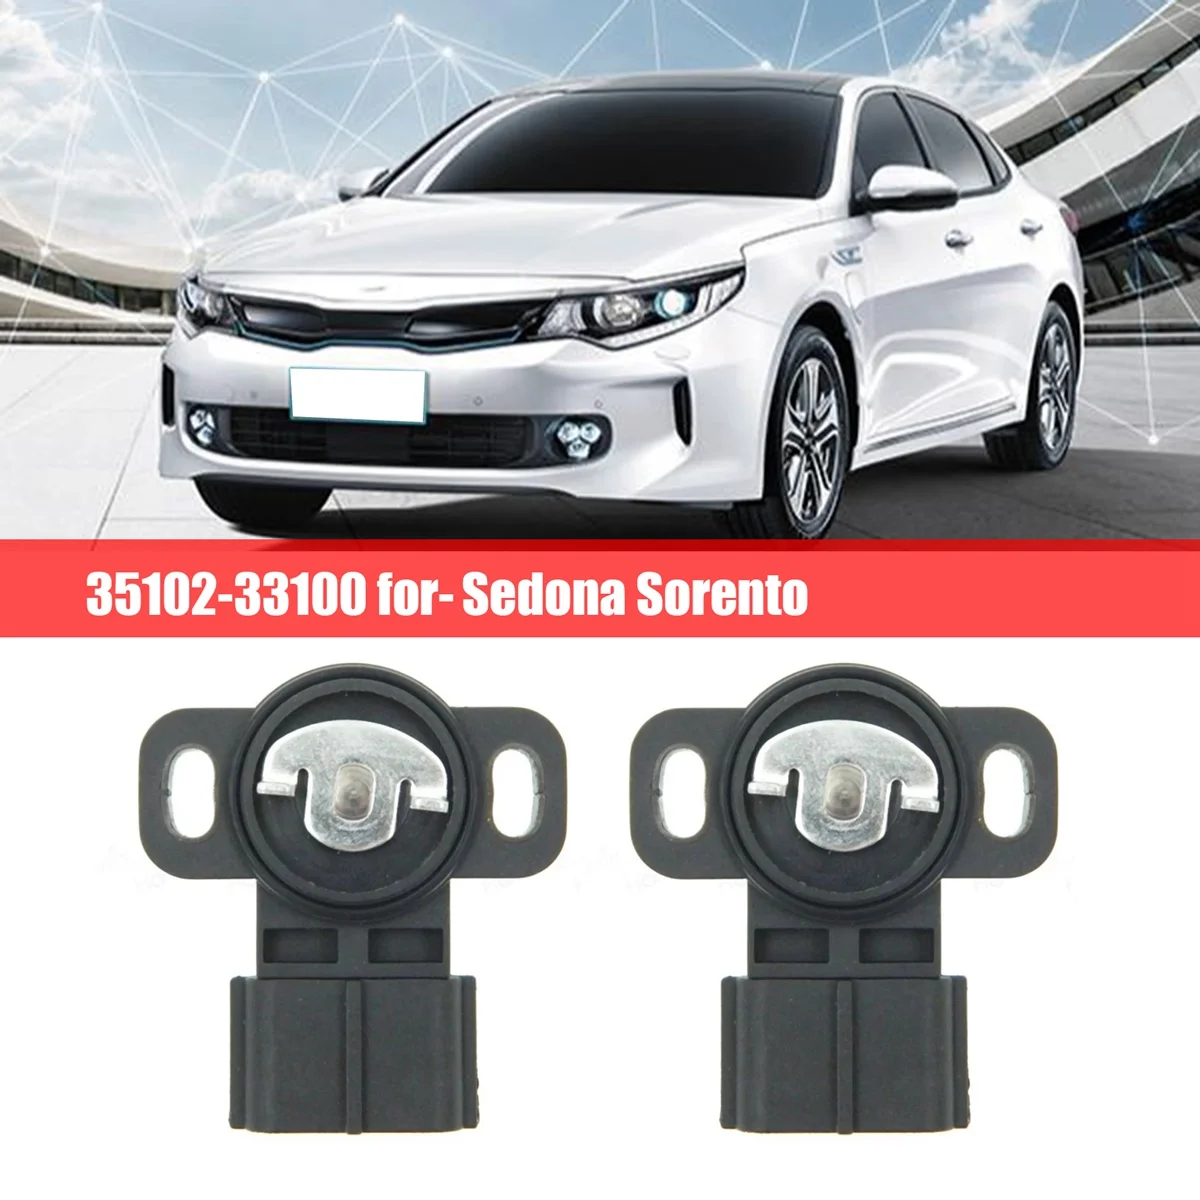 

35102-33100 Throttle Position Sensor Automotive-TPS Sensor for-Hyundai-Kia Sedona Sorento 2Pcs